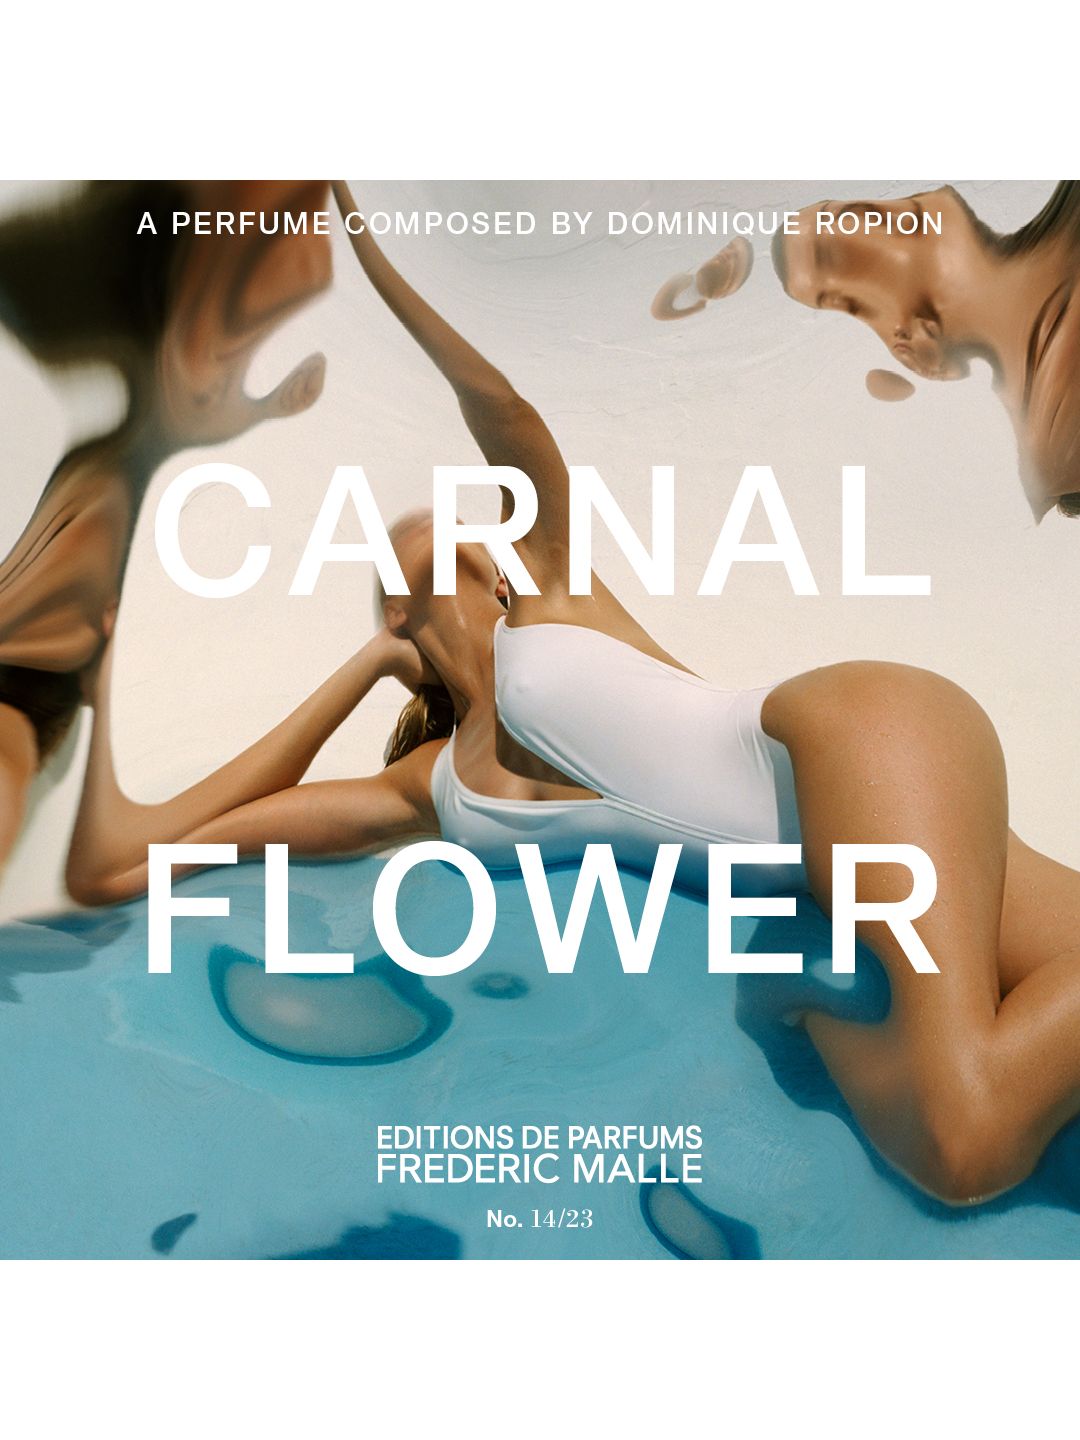 Frederic Malle Carnal Flower Eau de Parfum, 10ml 3